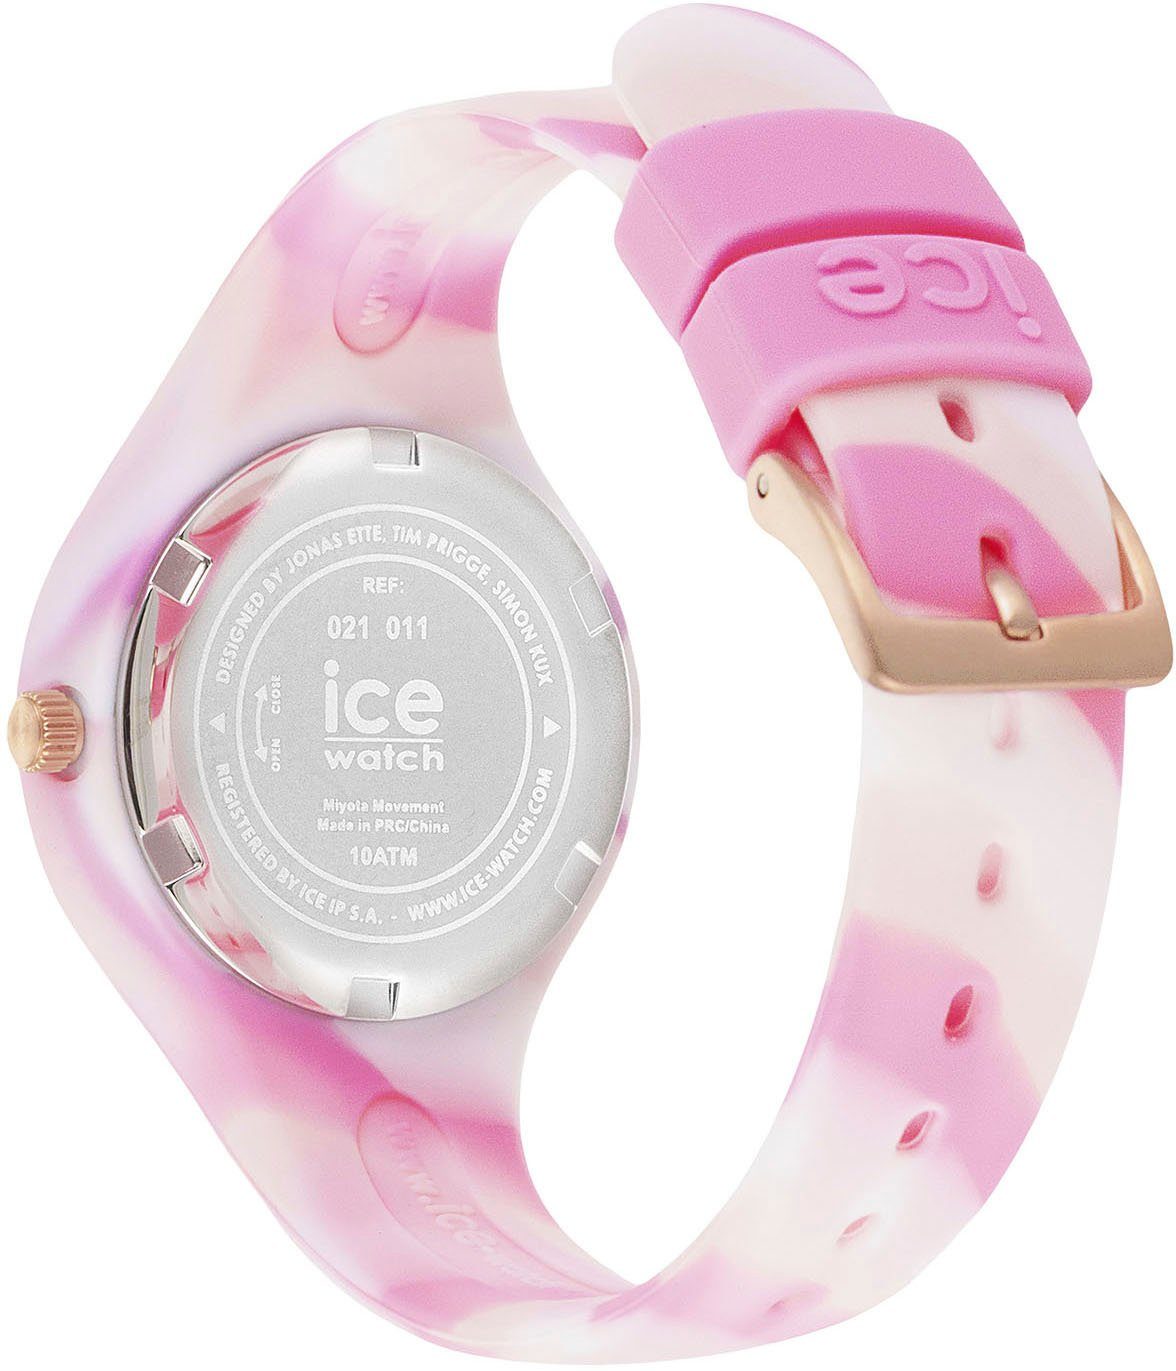 ideal and - Geschenk Extra-Small 3H, 021011, ice-watch als auch Quarzuhr - - shades dye ICE Pink tie